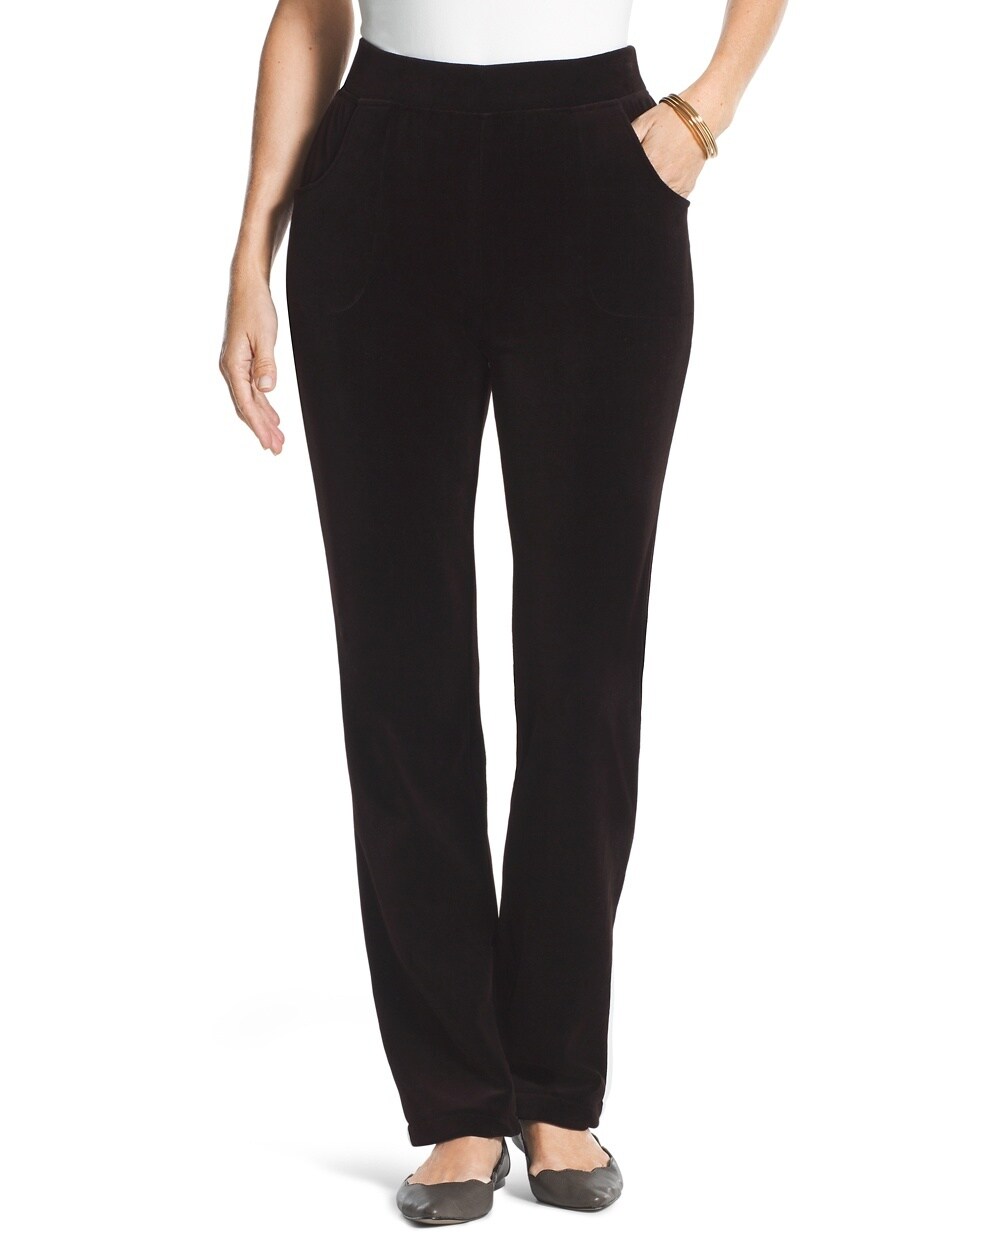 Zenergy Velour Pants in Deep Cocoa - Women's New Clothing - Tops ...